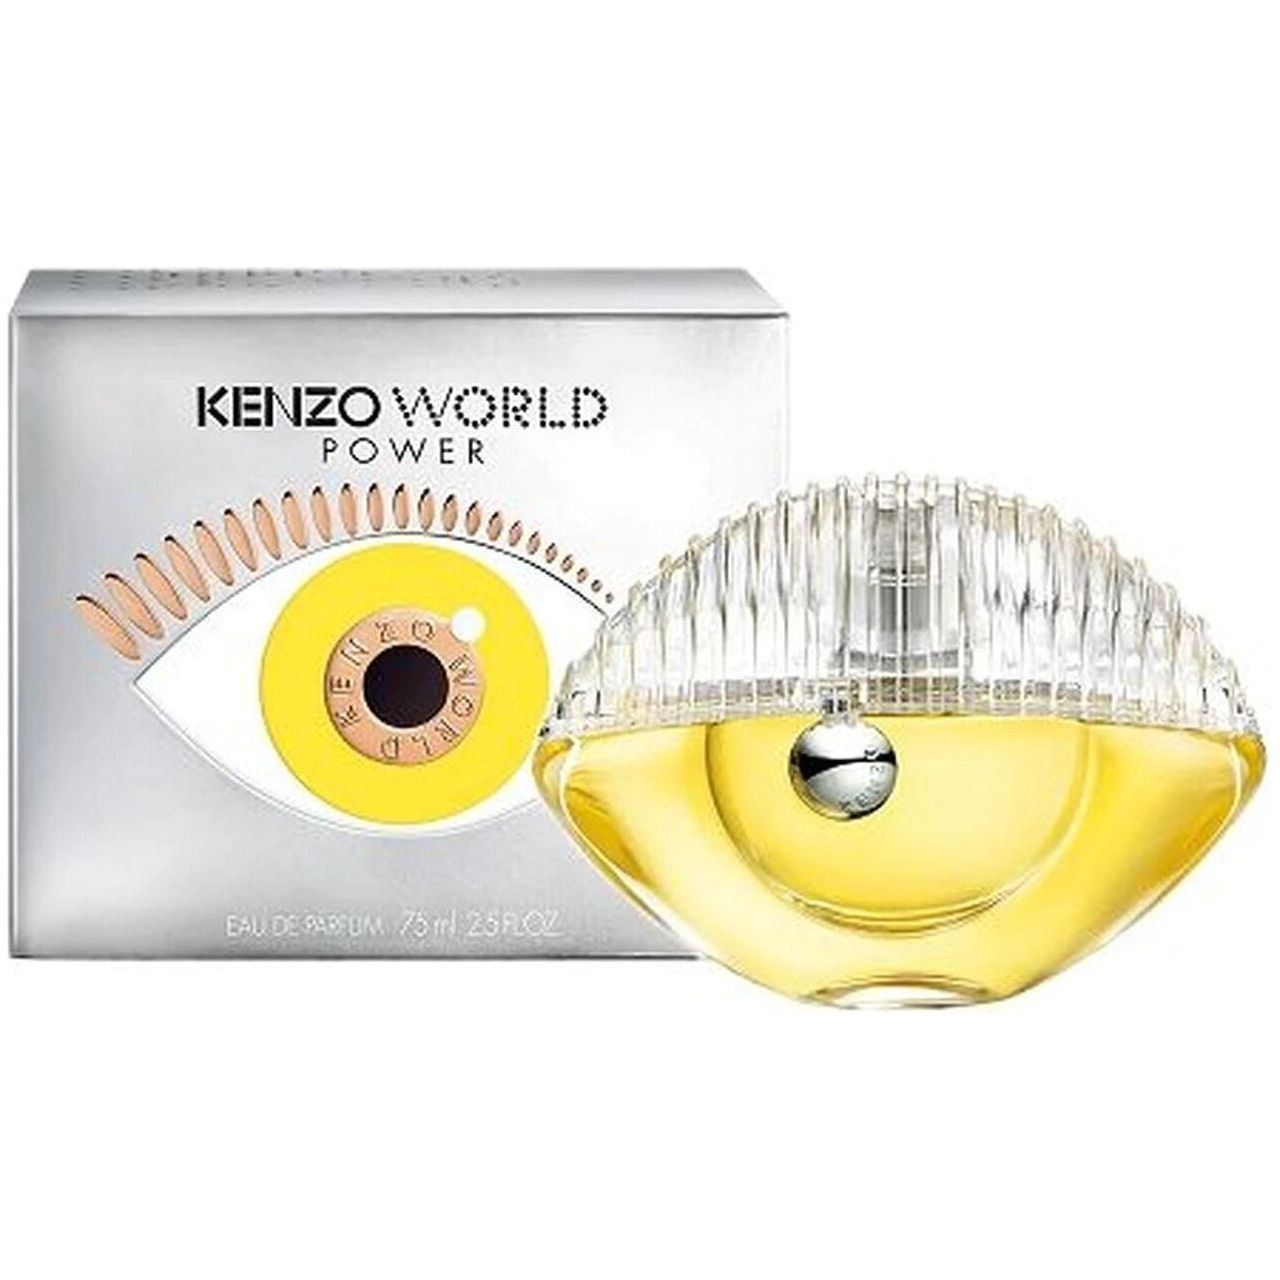 KENZO WORLD POWER by Kenzo 2.5 in oz perfume New EDP women Box for